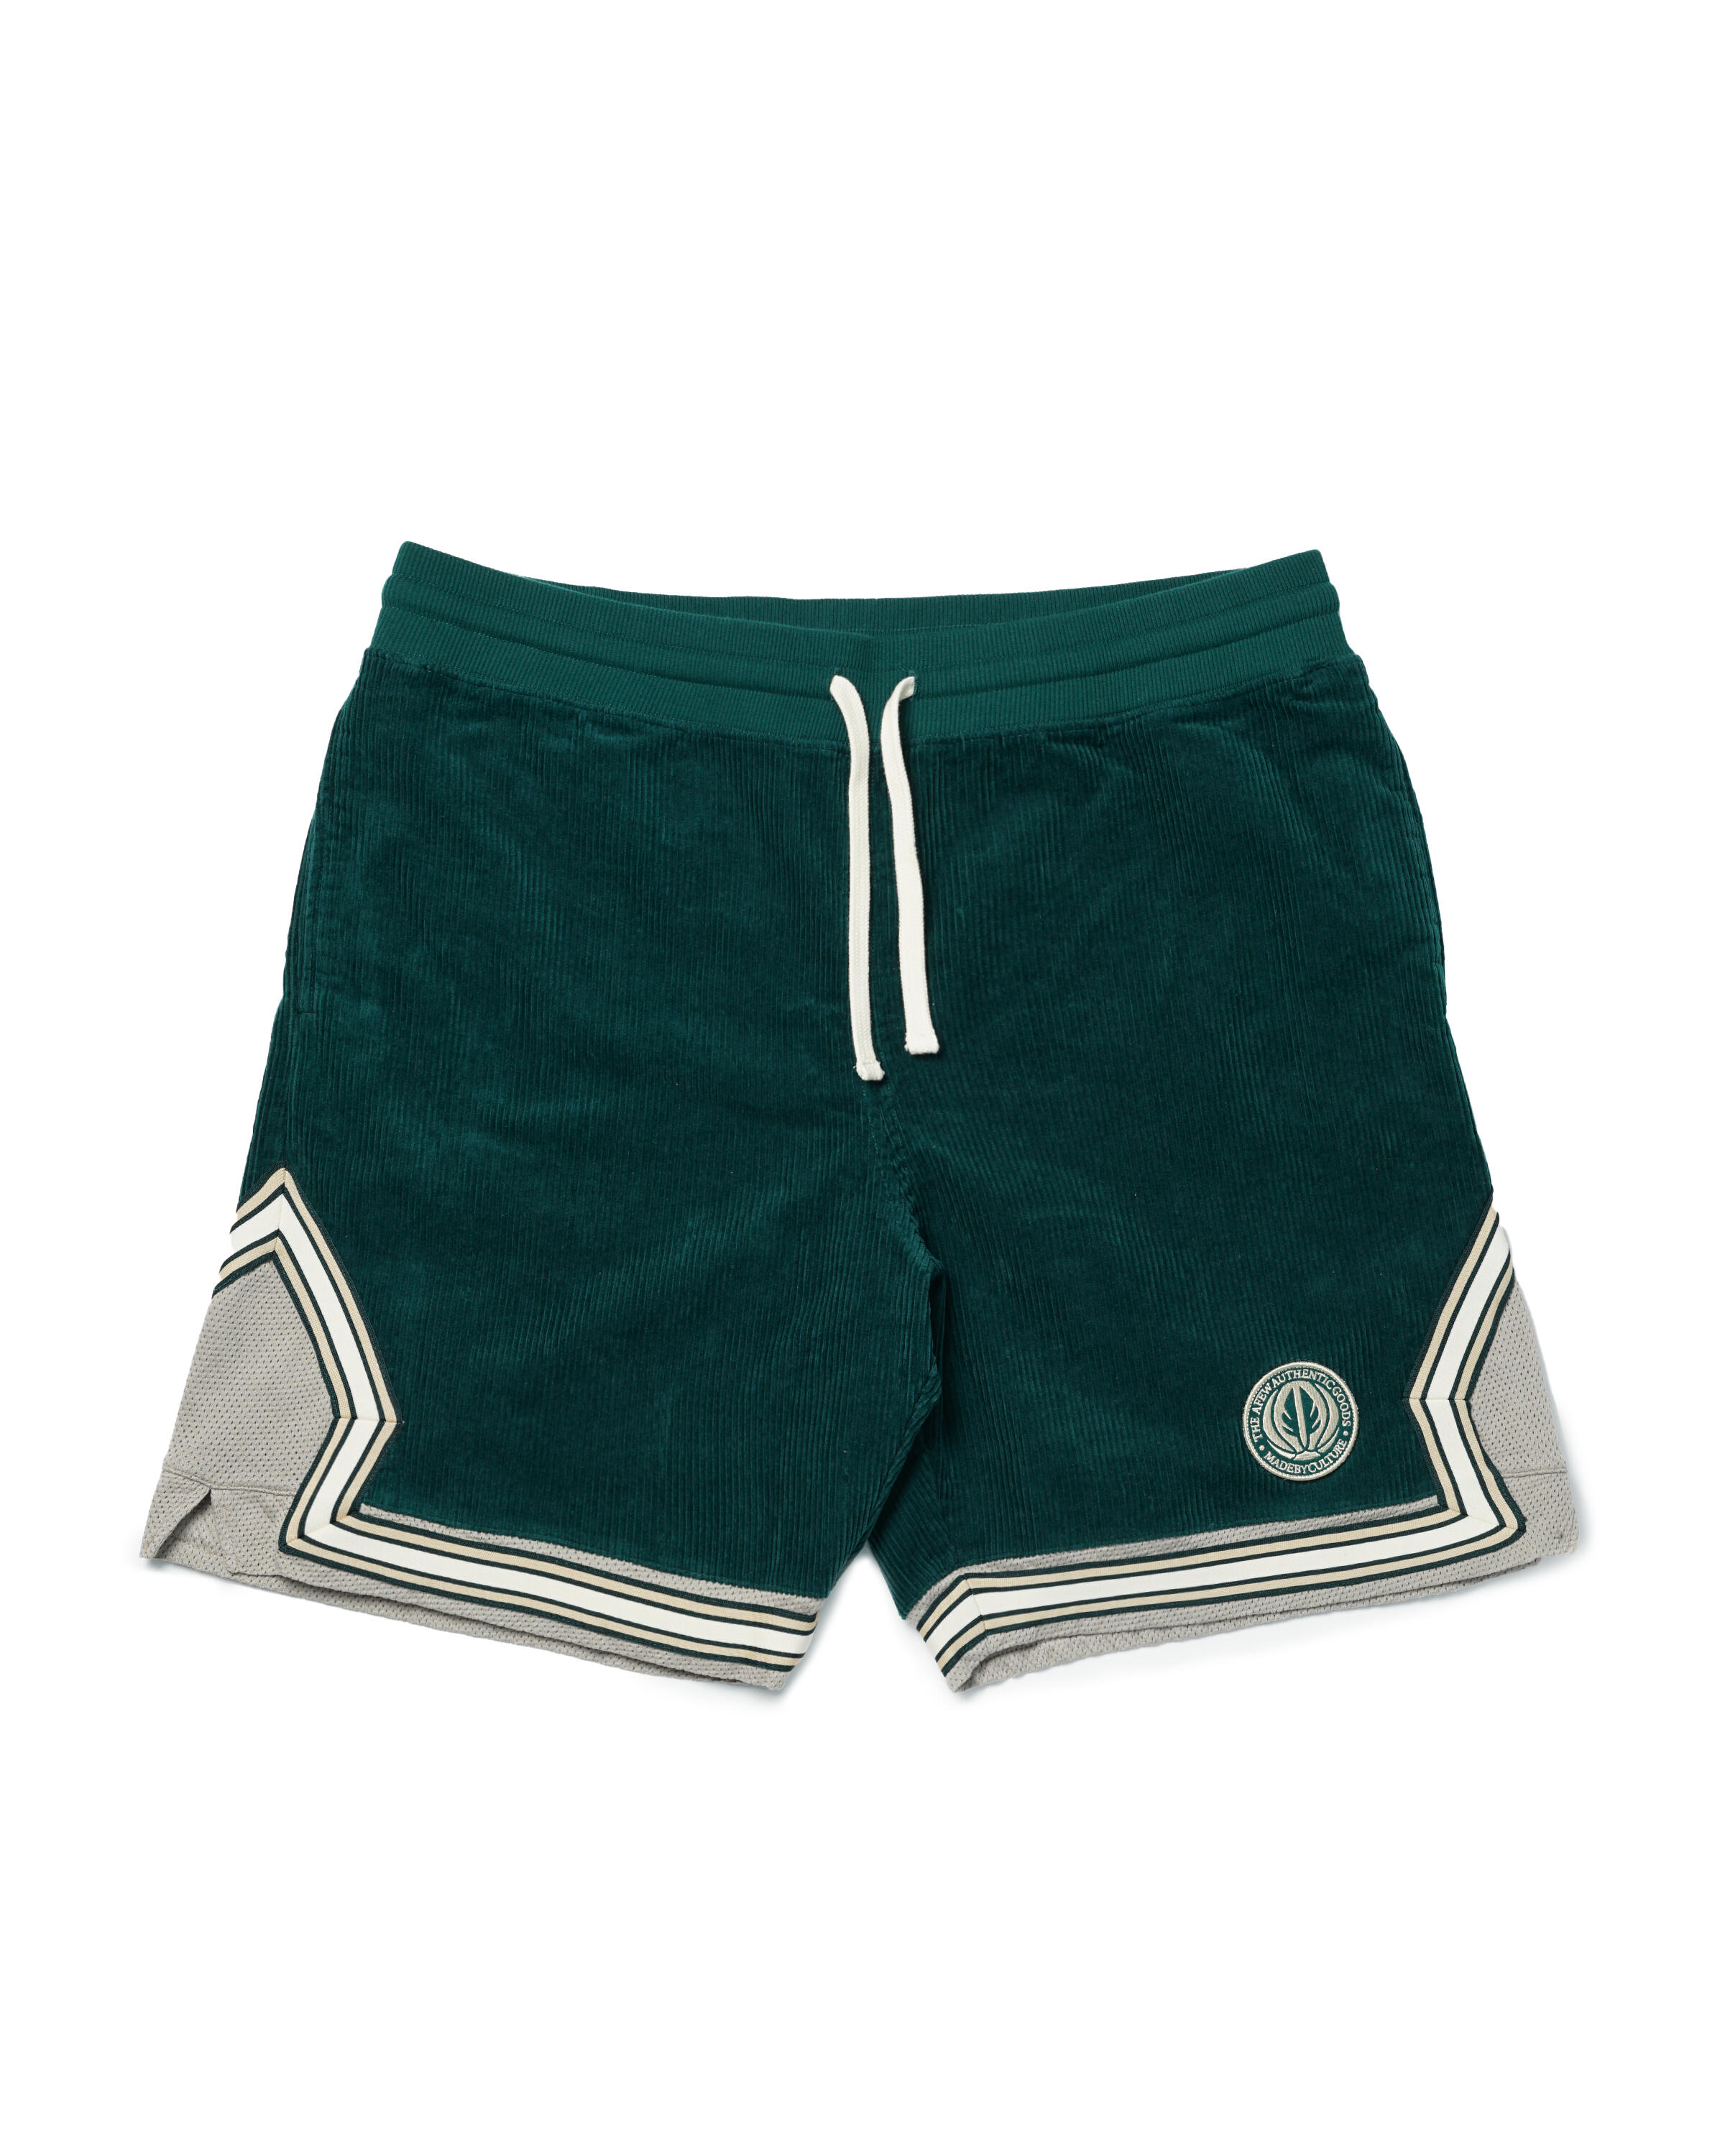 afew goods ag off-court shorts